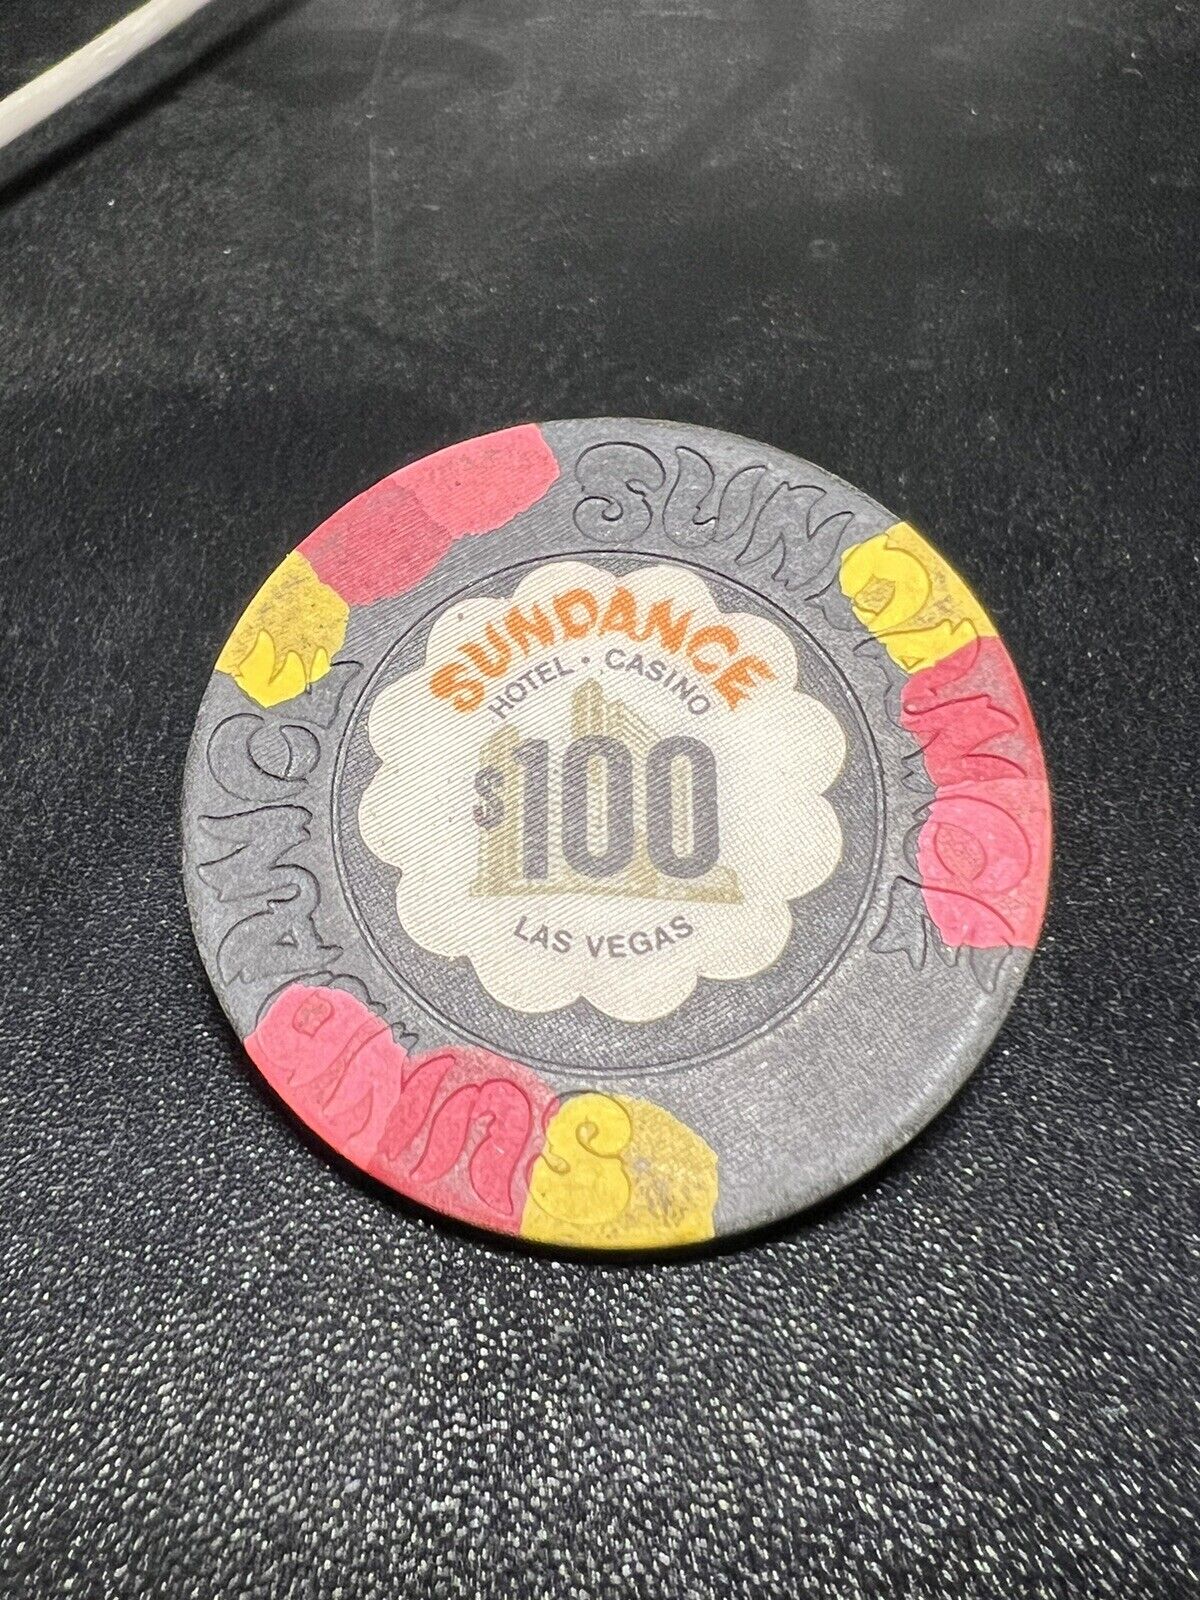 $100 sundance casino chip las vegas nevada obsolete Table Played super rare